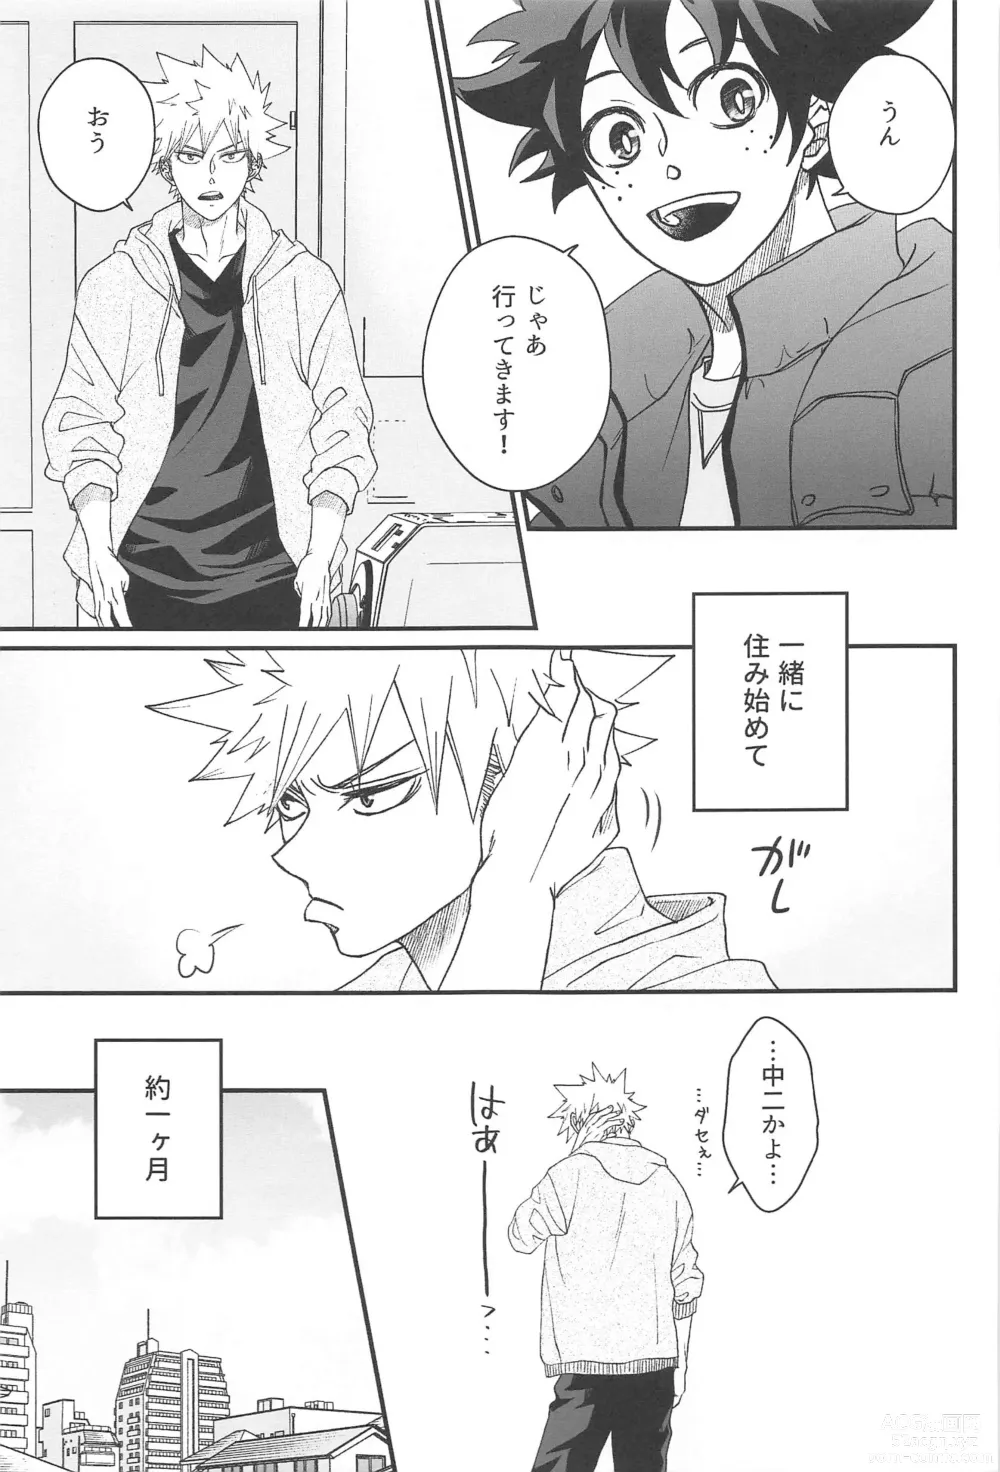 Page 6 of doujinshi 0.01